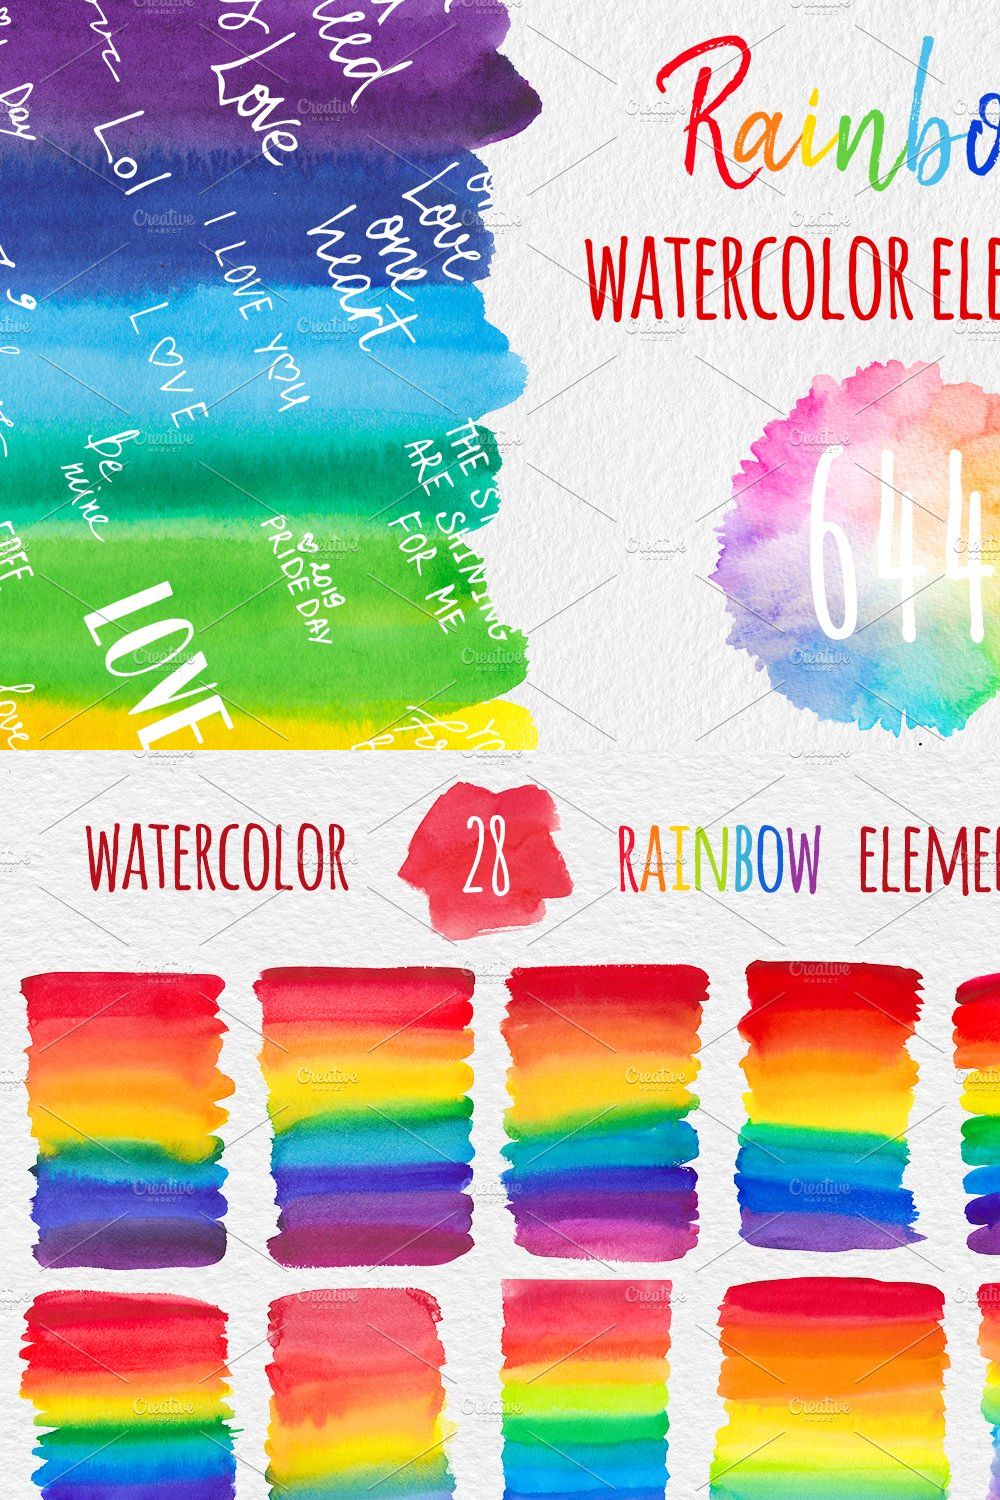 Rainbow watercolor texture set pinterest preview image.